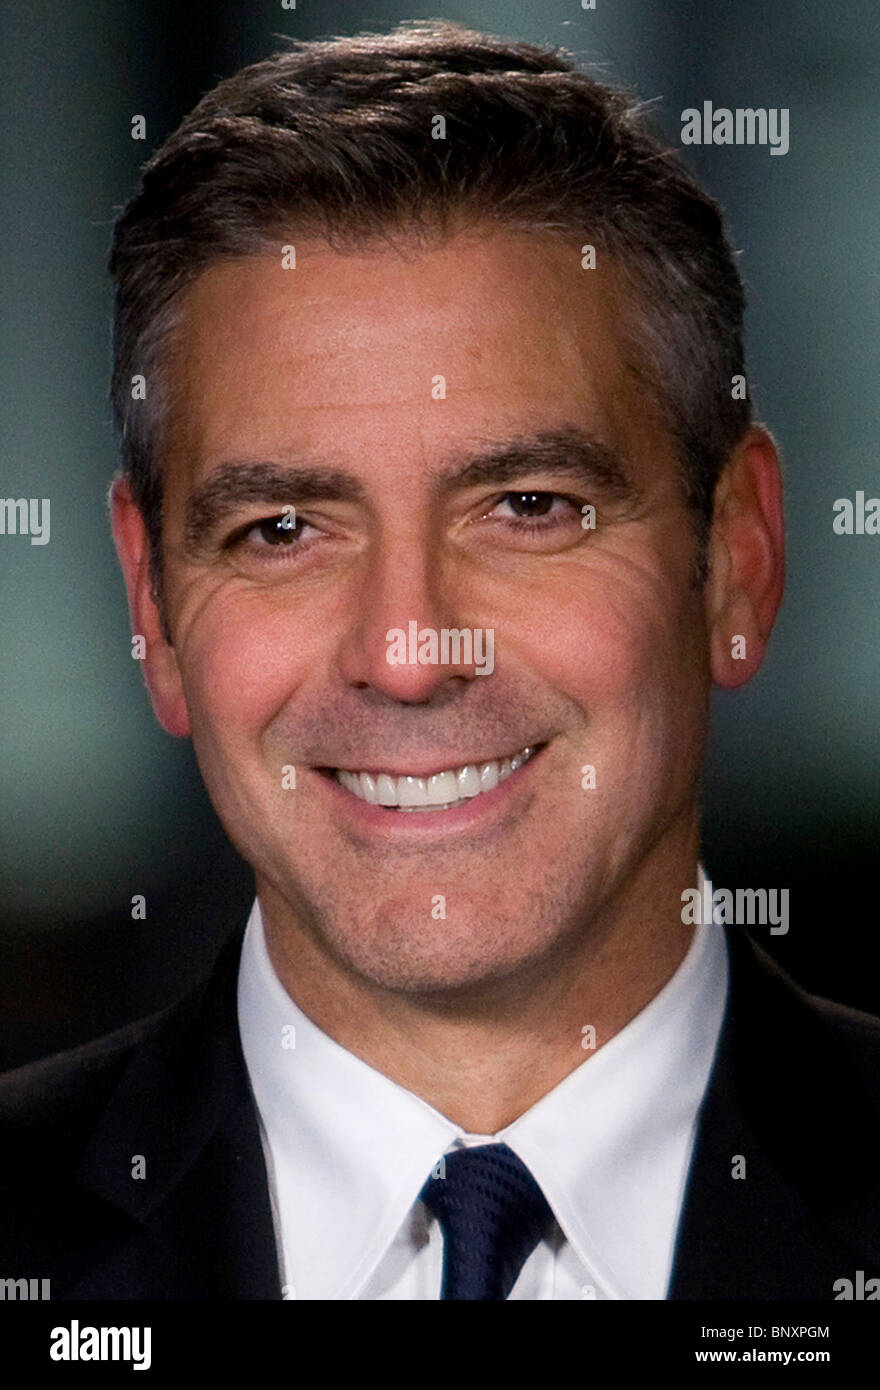 Actor George Clooney. Stock Photo